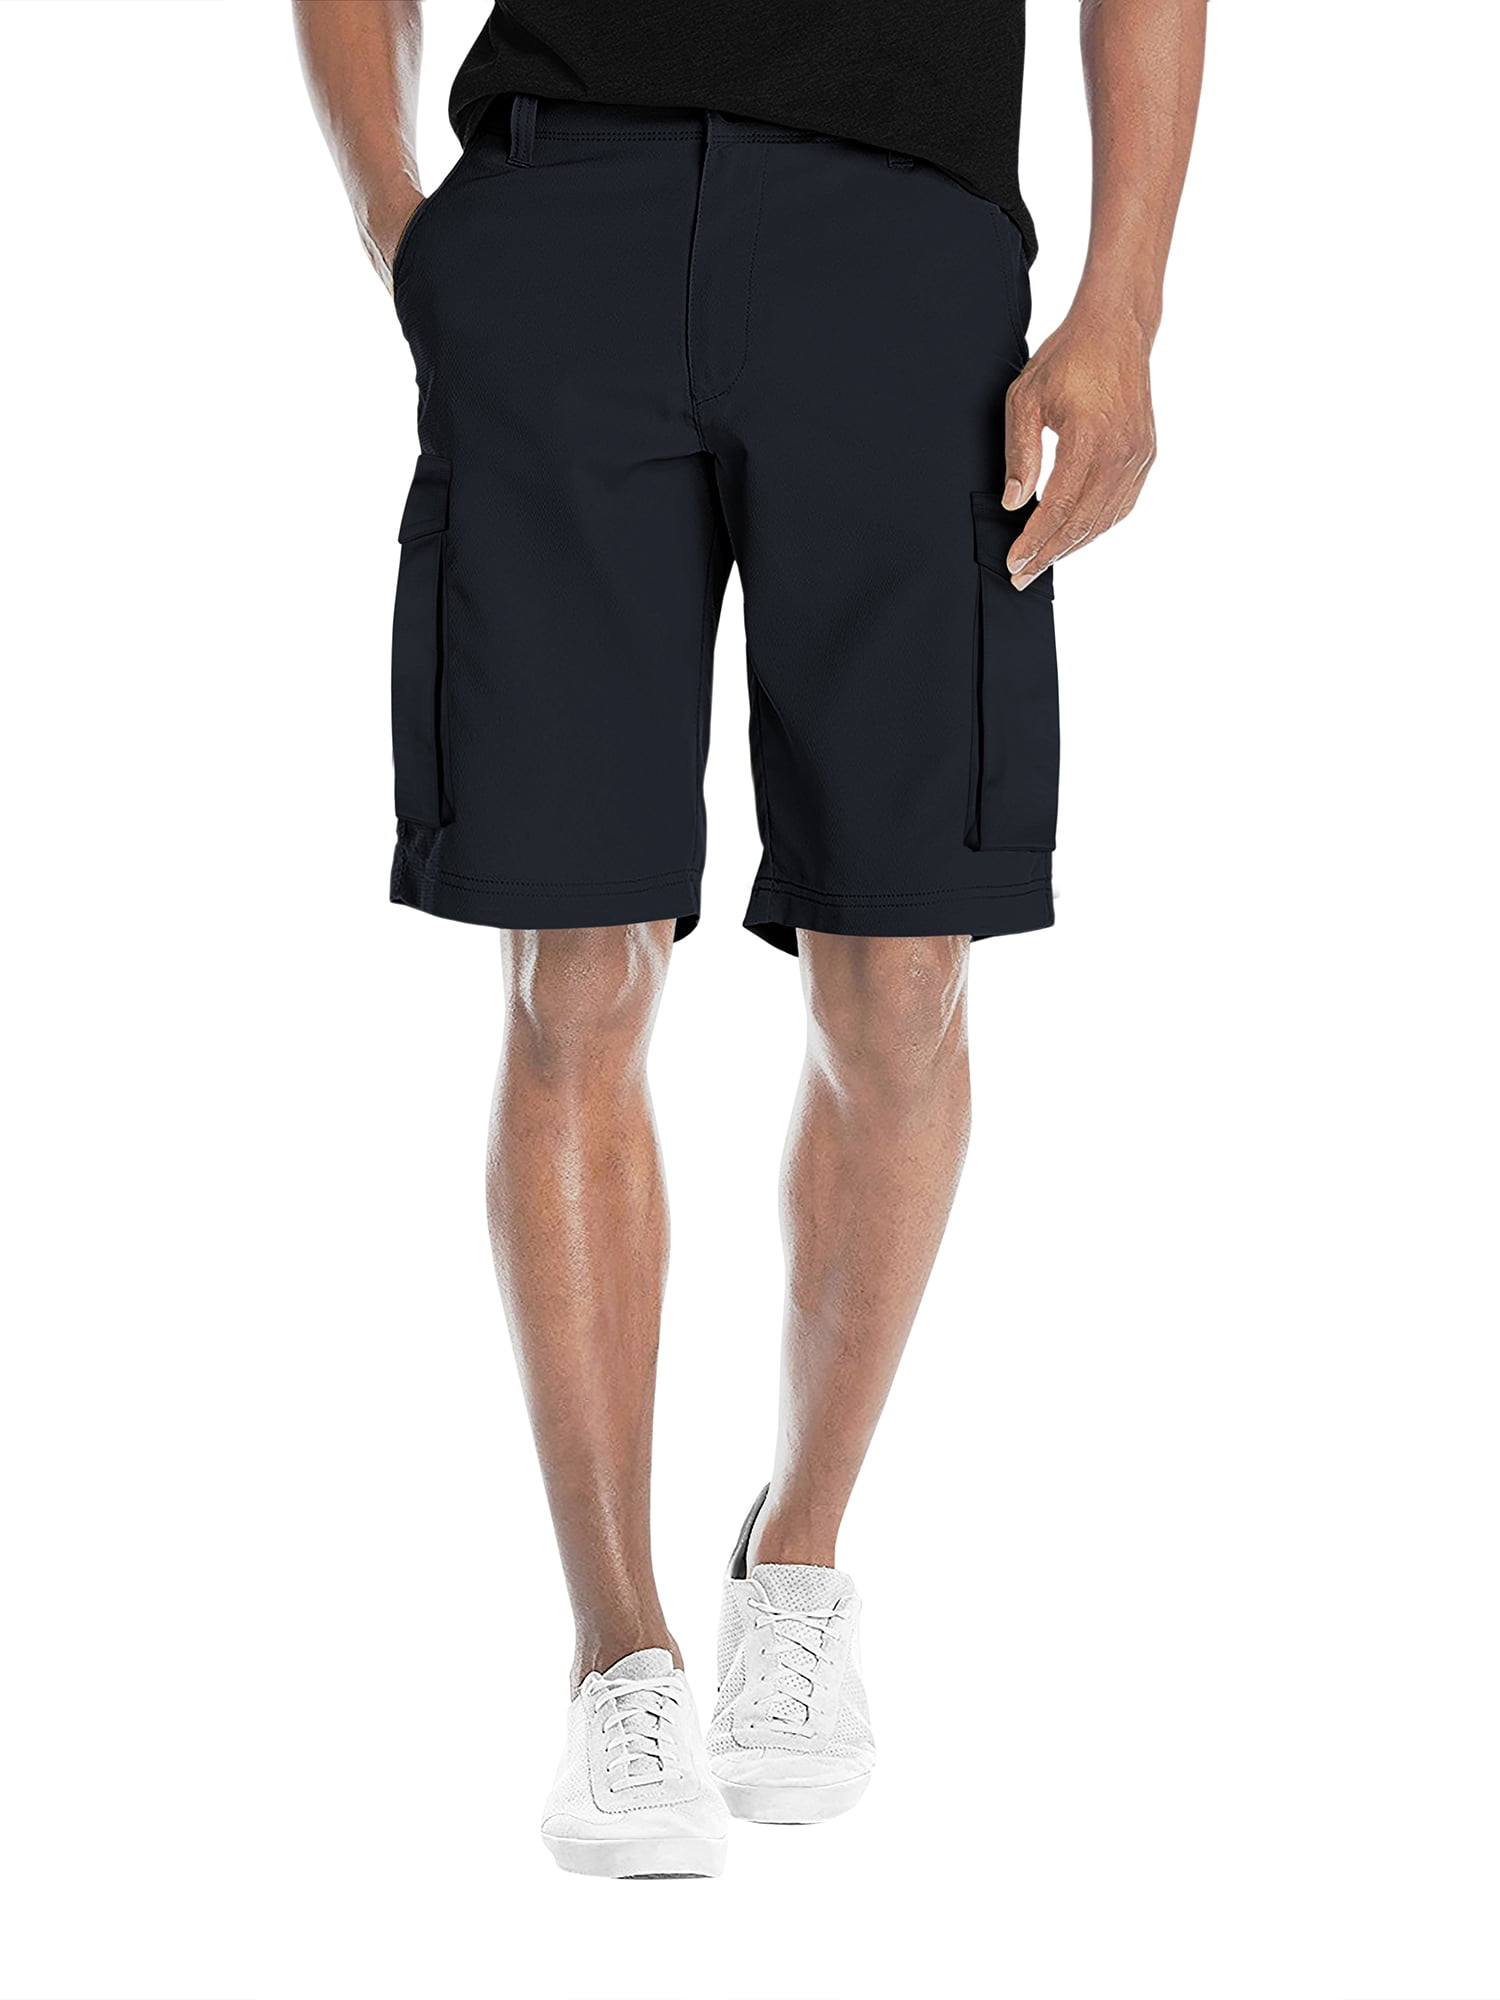 Buy Mens Super Comfy Flex Waist Cargo Shorts Online at Lowest Price in ...